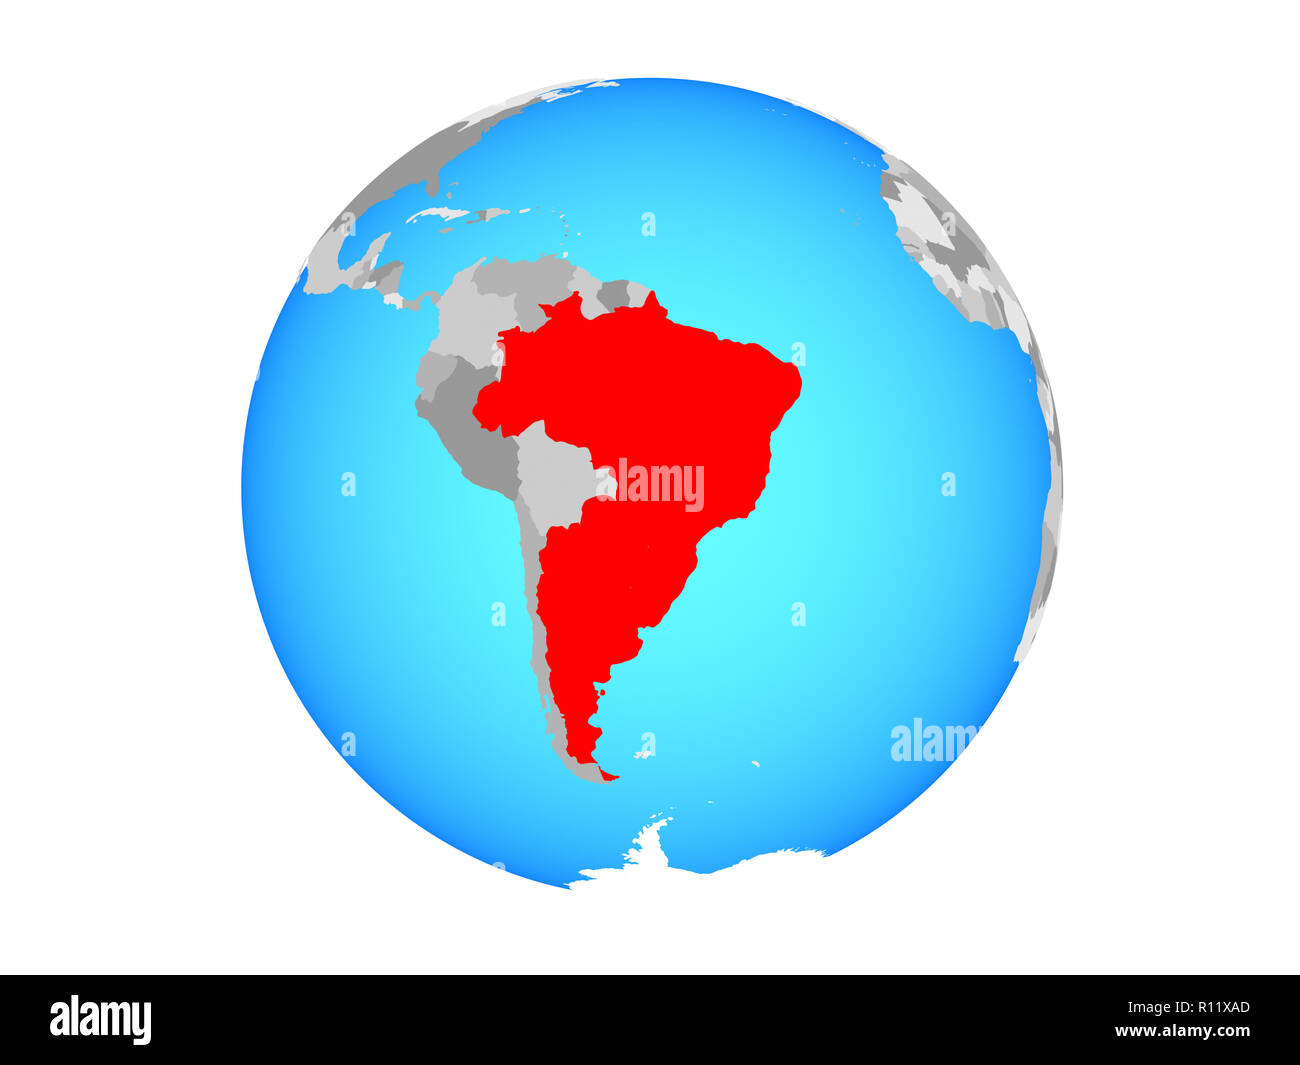 Mercosur memebers on blue political globe. 3D illustration isolated on white background. Stock Photo